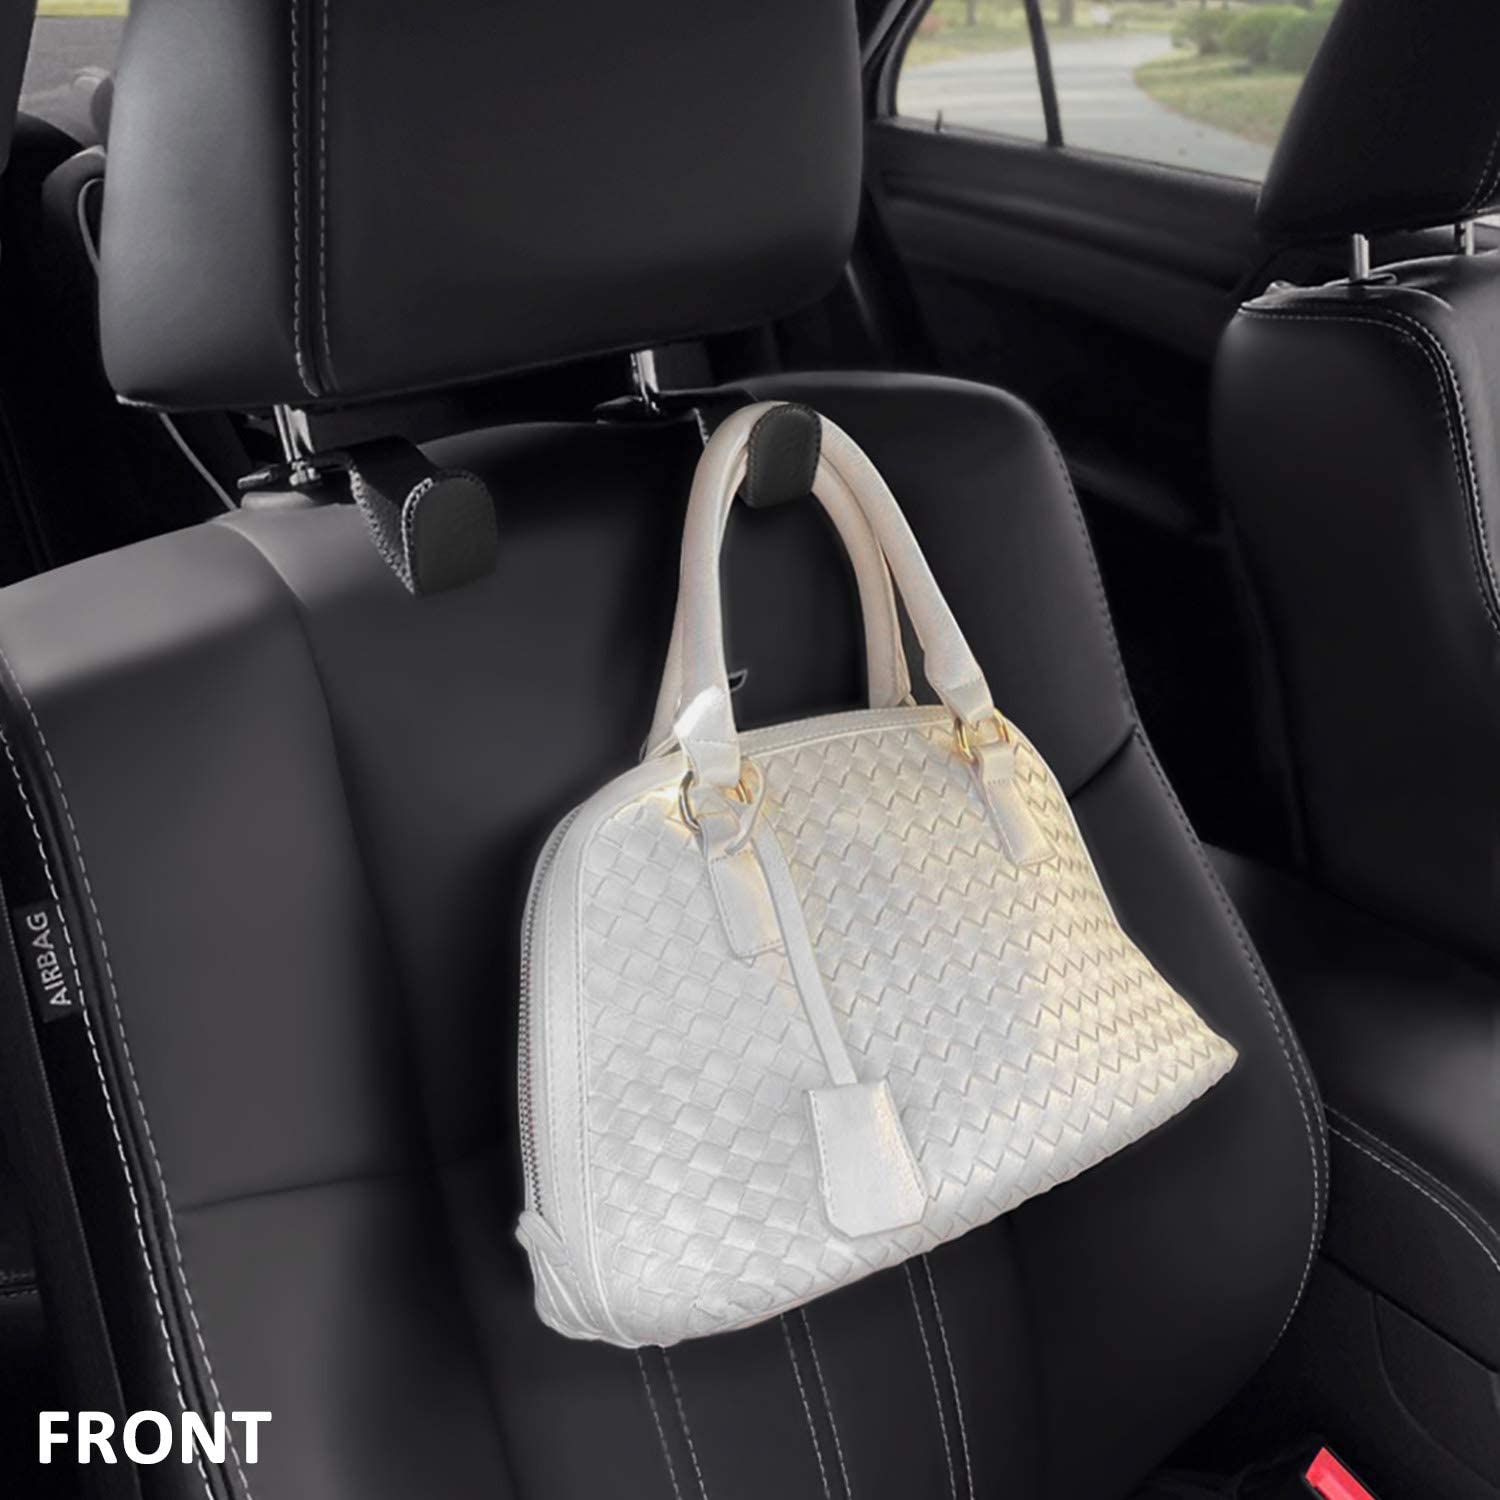 AMVOYOA Car Headrest Hook, Leather Vehicle Back Seat Hanger